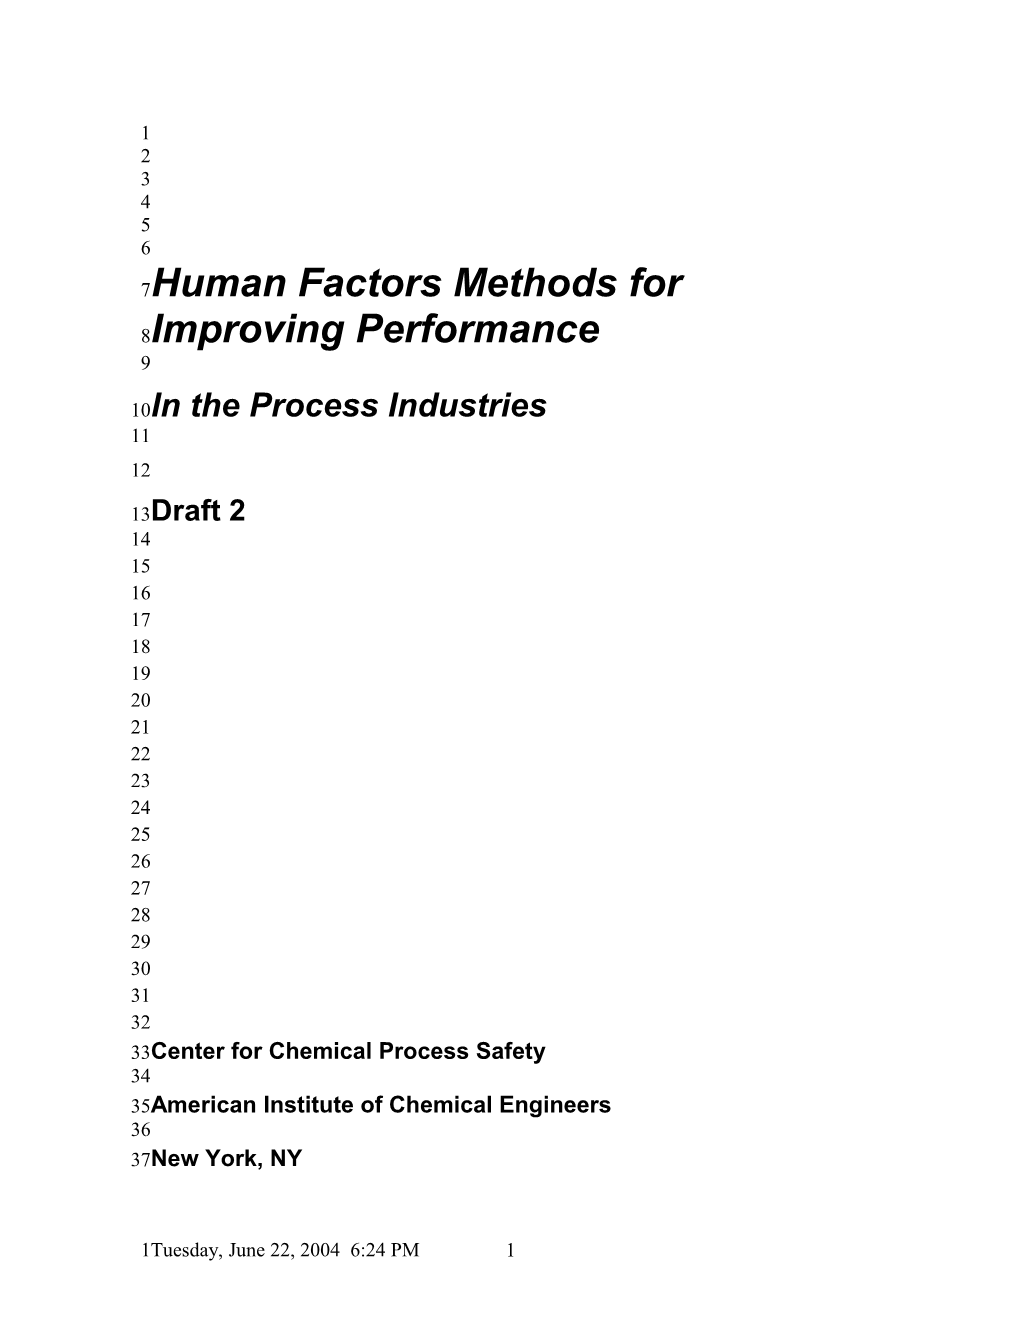 Human Factors Methods for Improving Performance